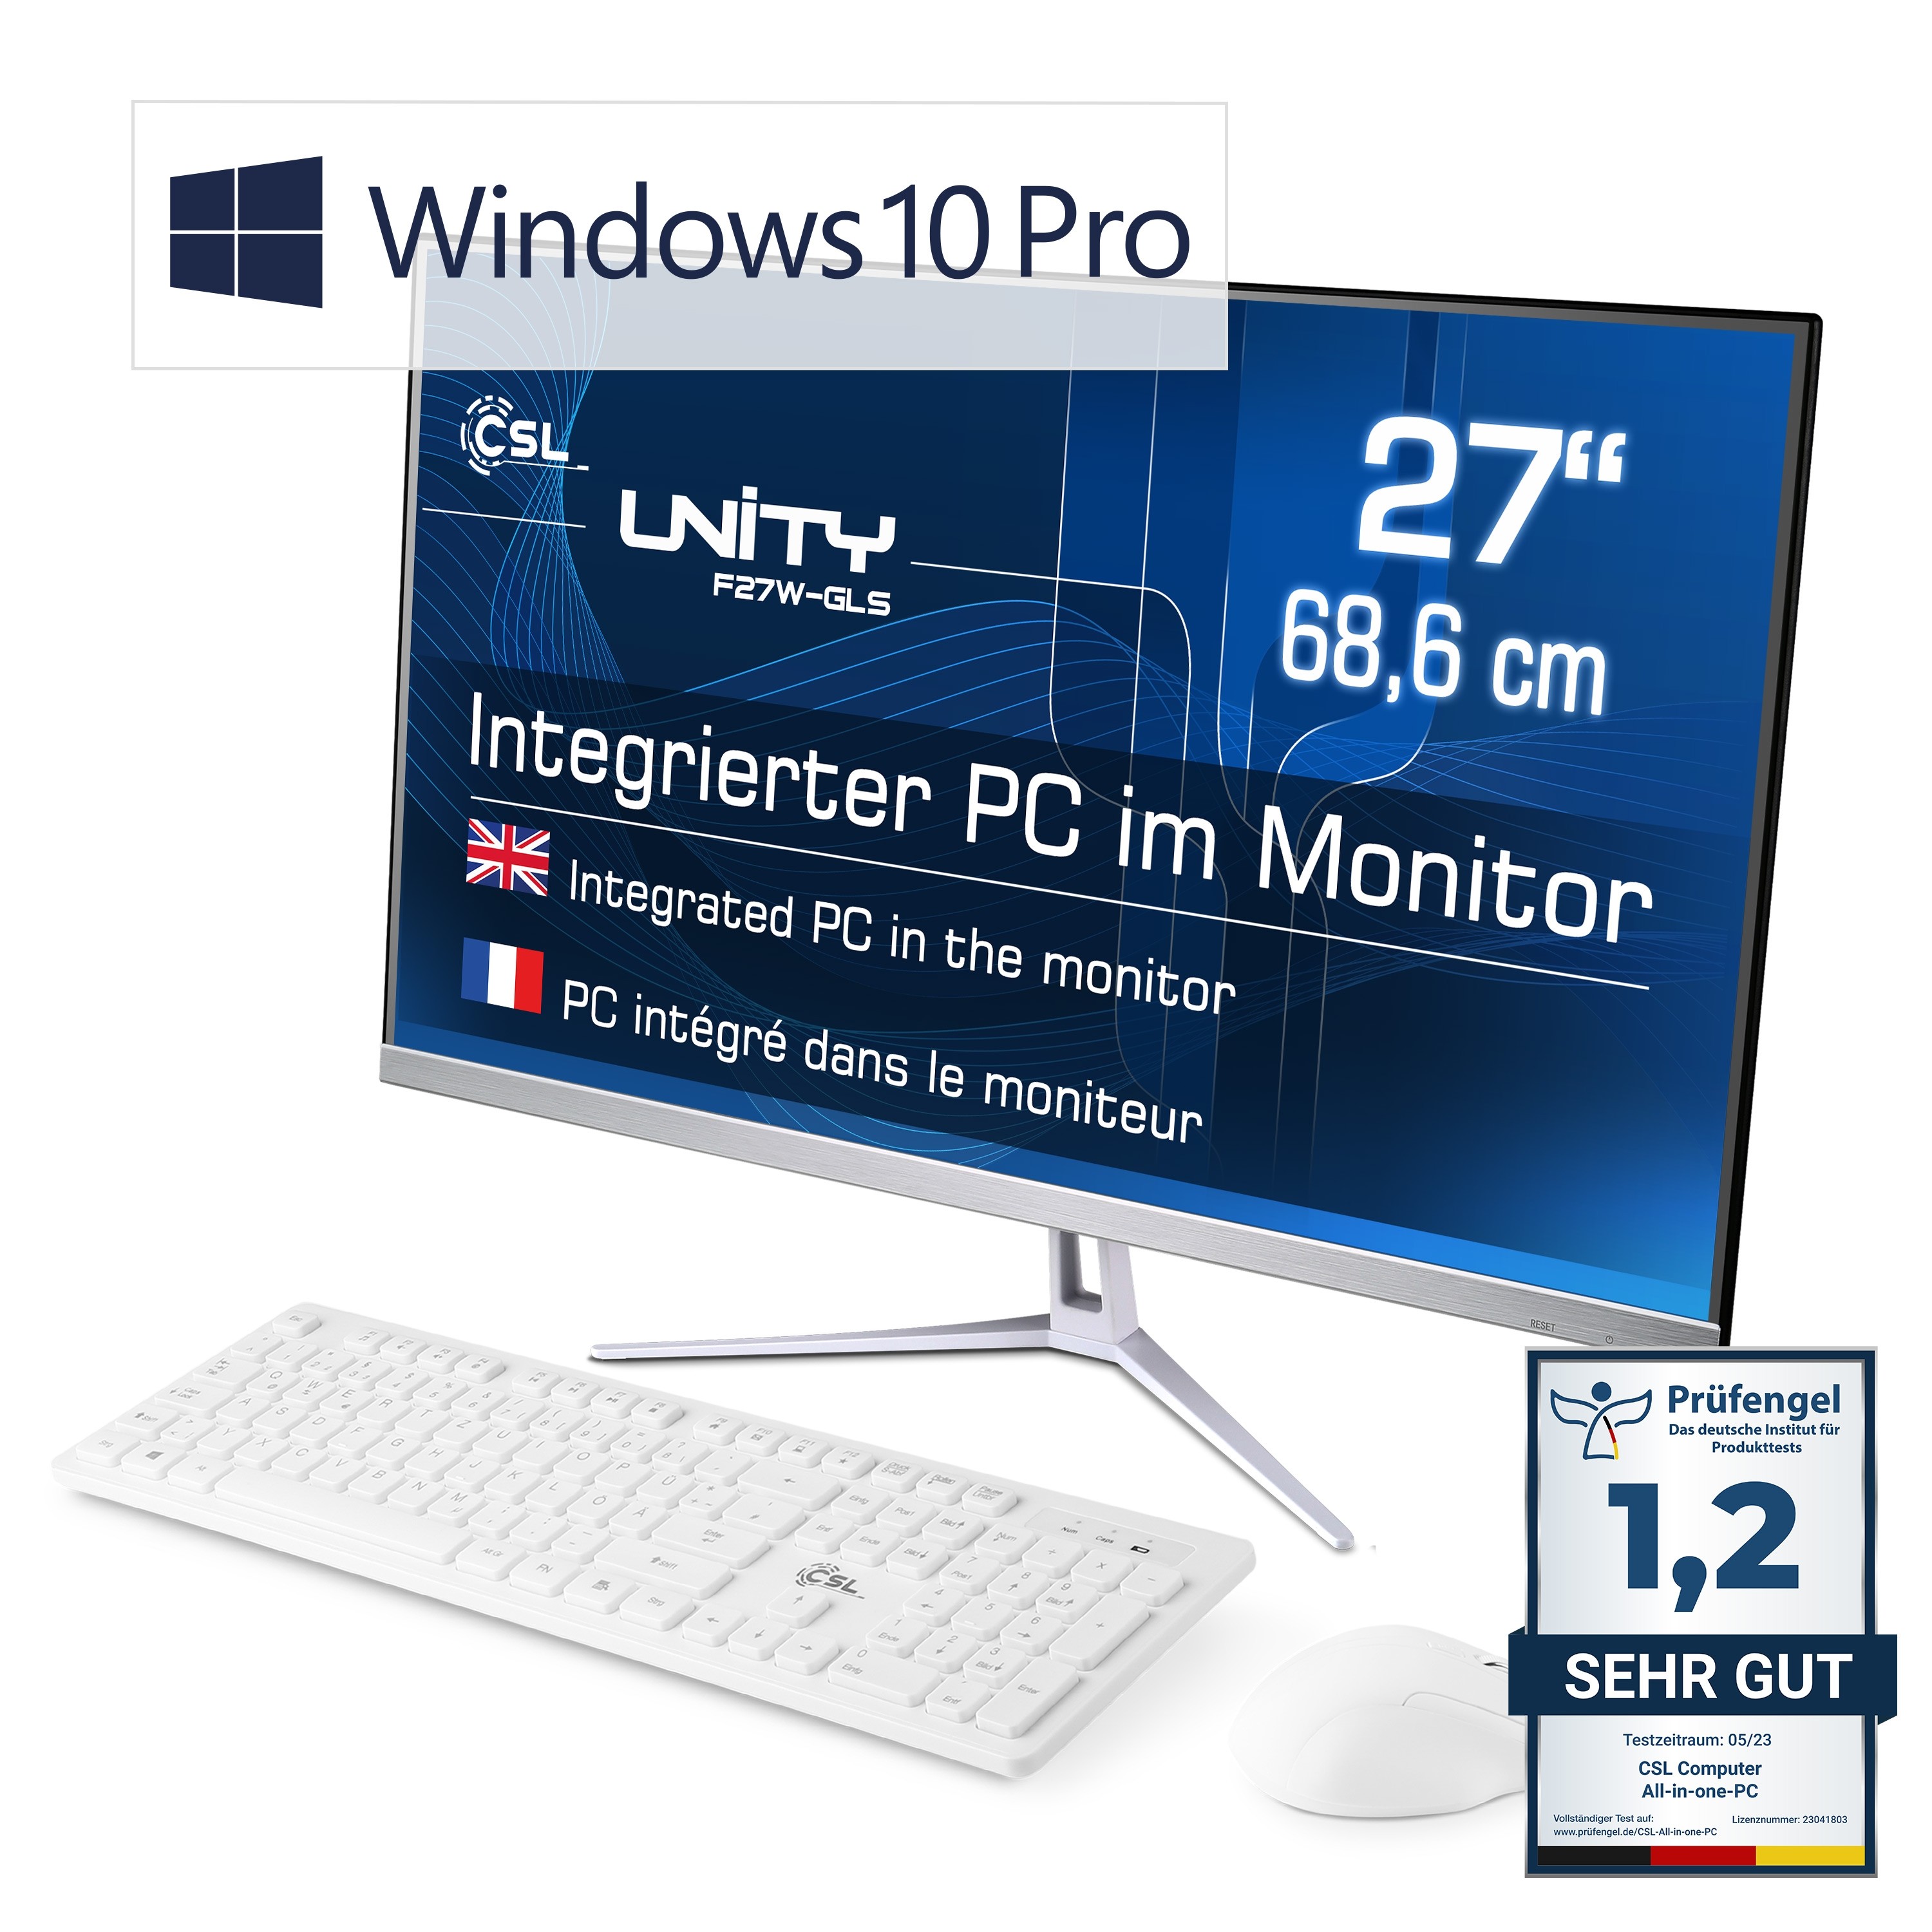 CSL Computer | RAM Unity / 16 GB Pro All-in-One-PC 10 / Pentium 512 CSL F27W-JLS Windows GB 